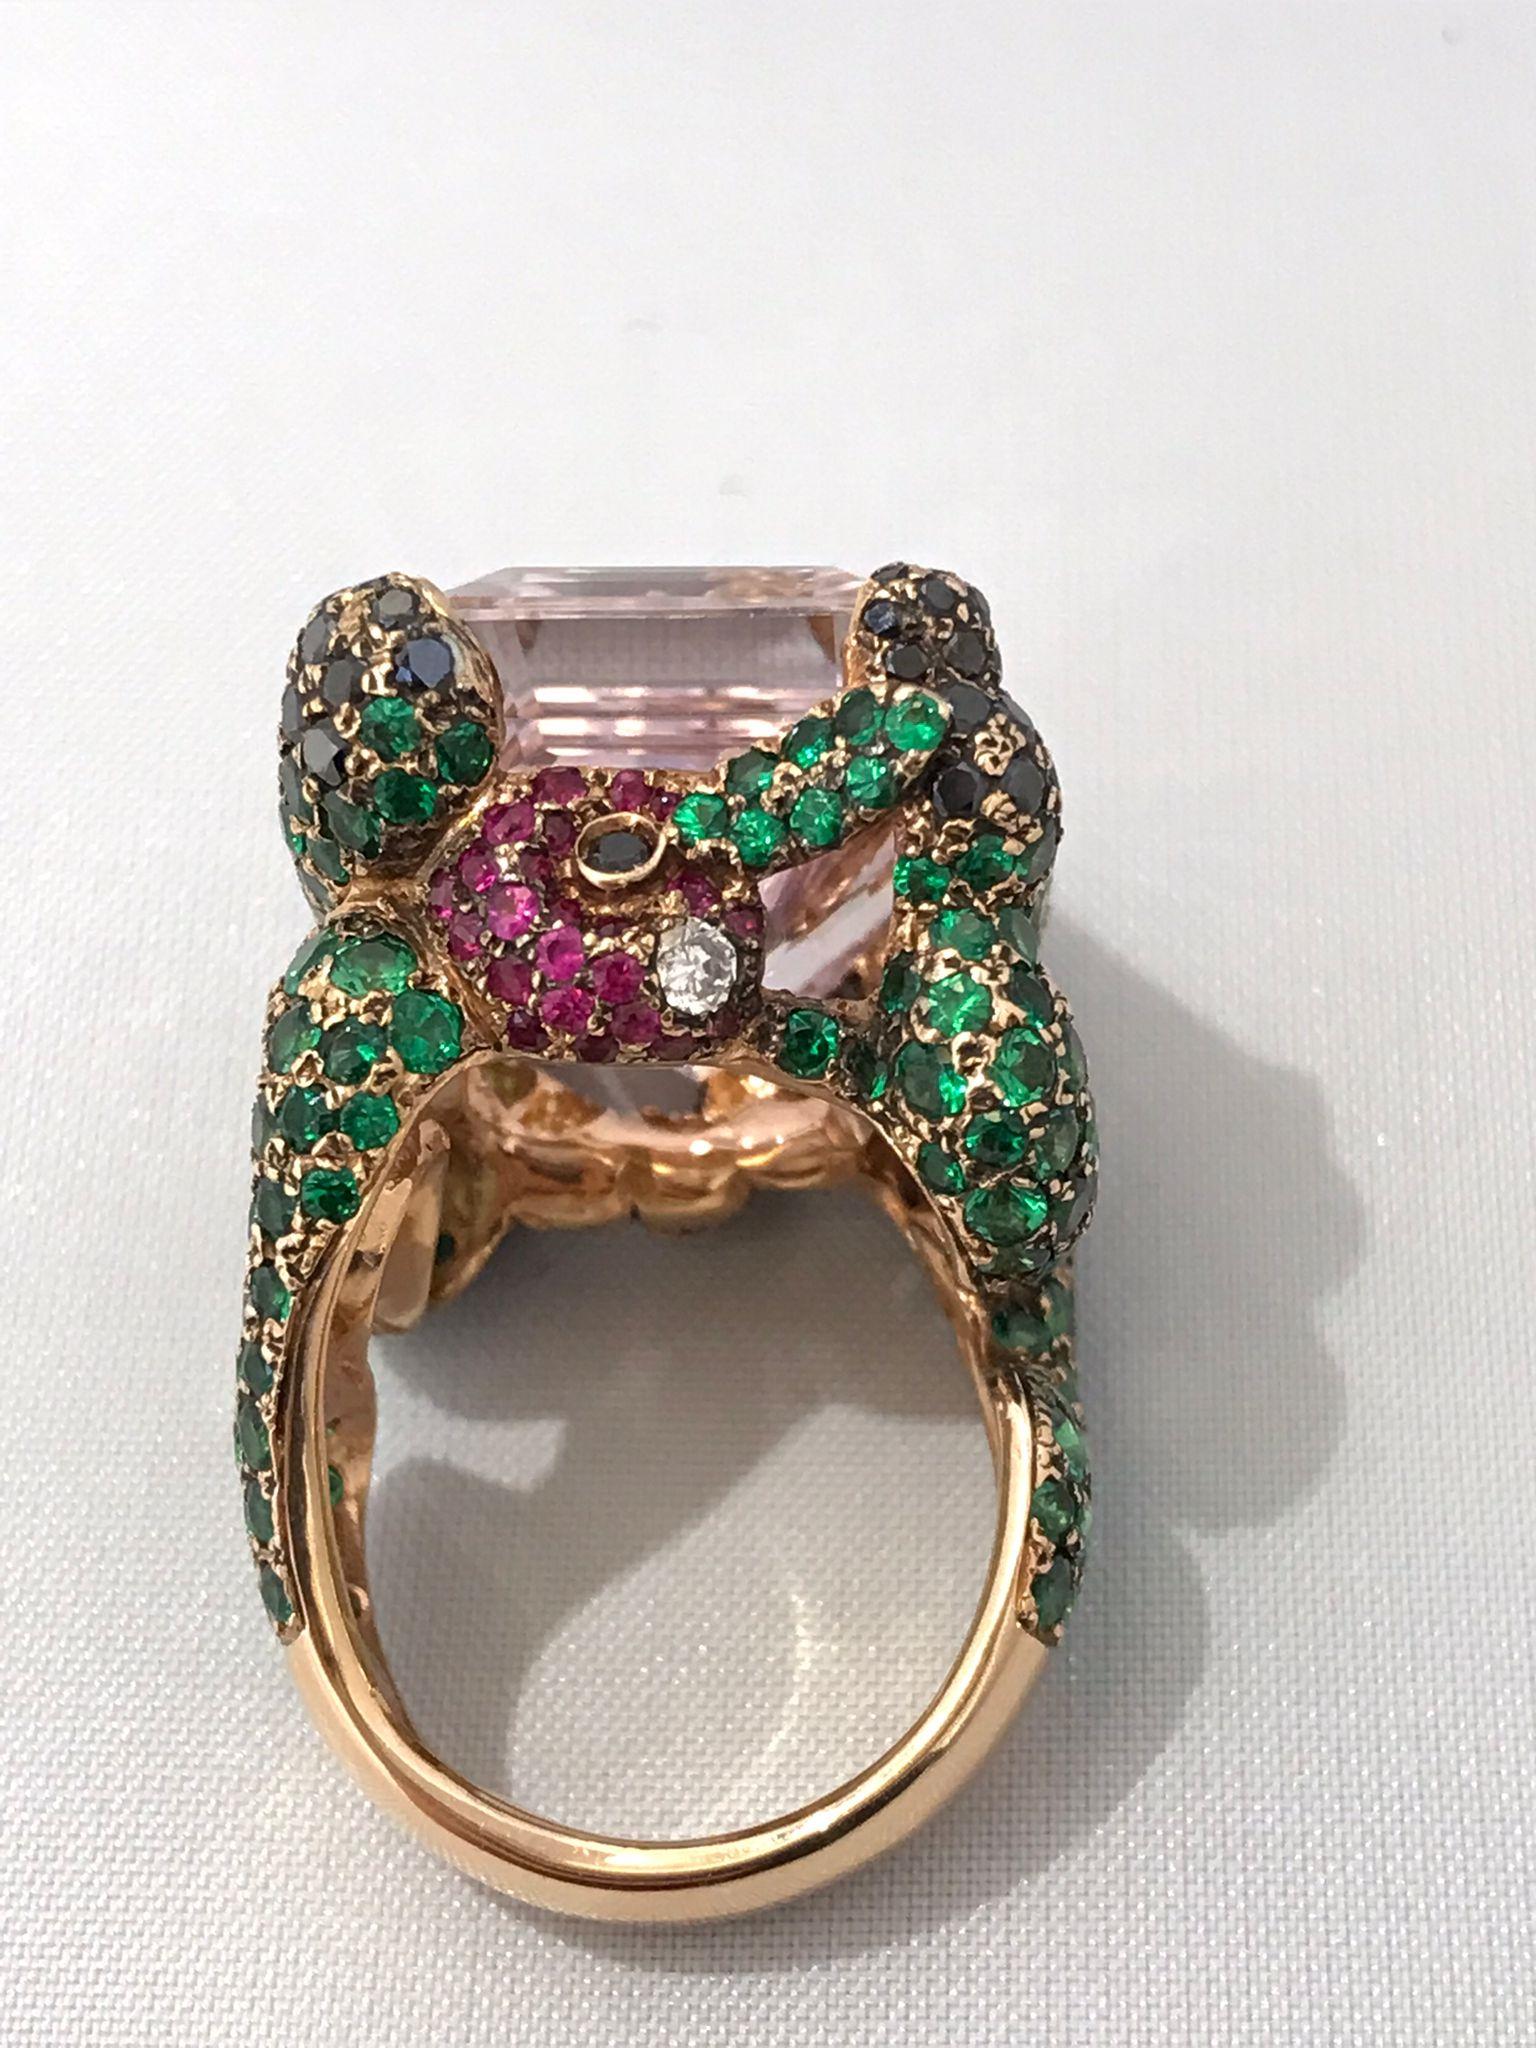 Bruco Mela statement ring, handmade with 18kt rose gold (22,50gr), center kunzite stone (28,23 carat), tzavorrite 7,32 carat, rubies 0.27 carat and diamonds 1,31 carat